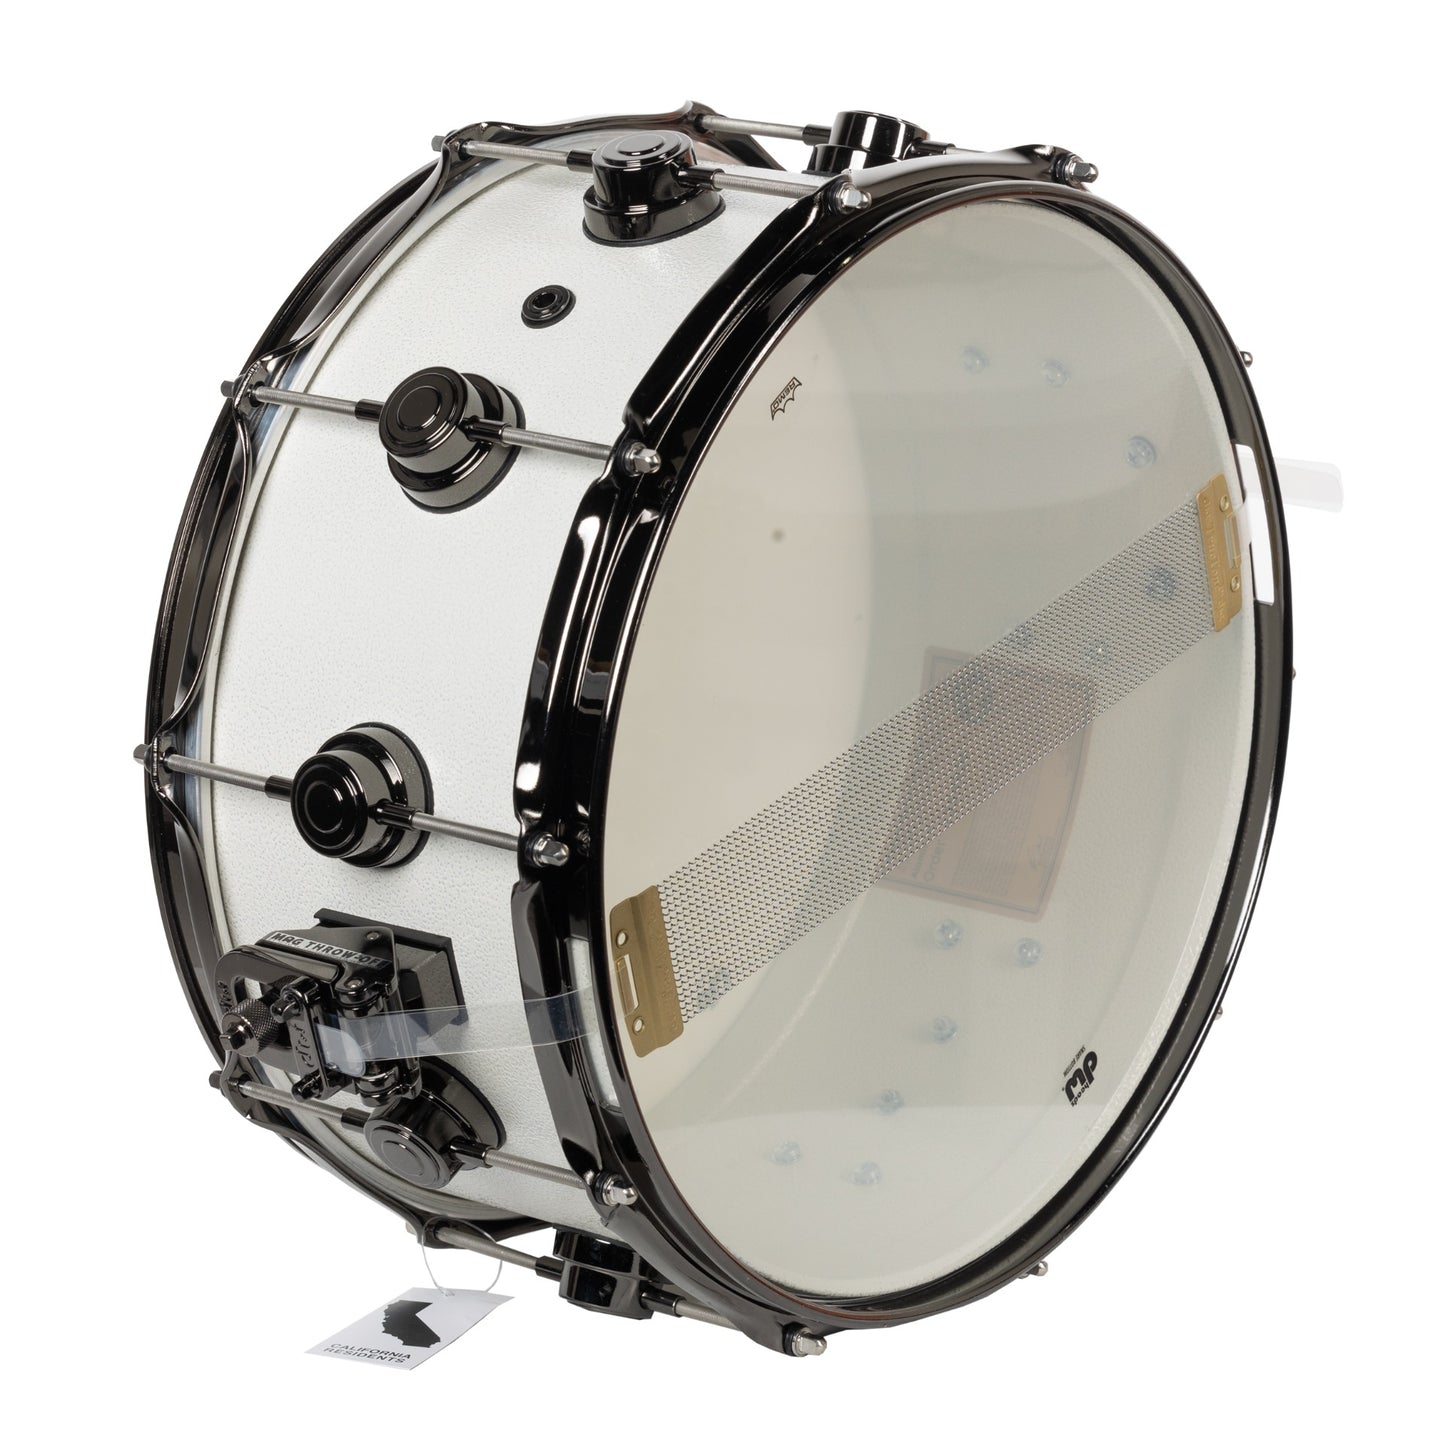 Drum Workshop Collectors Series 6.5x14 Snare Drum - Powder Coated White